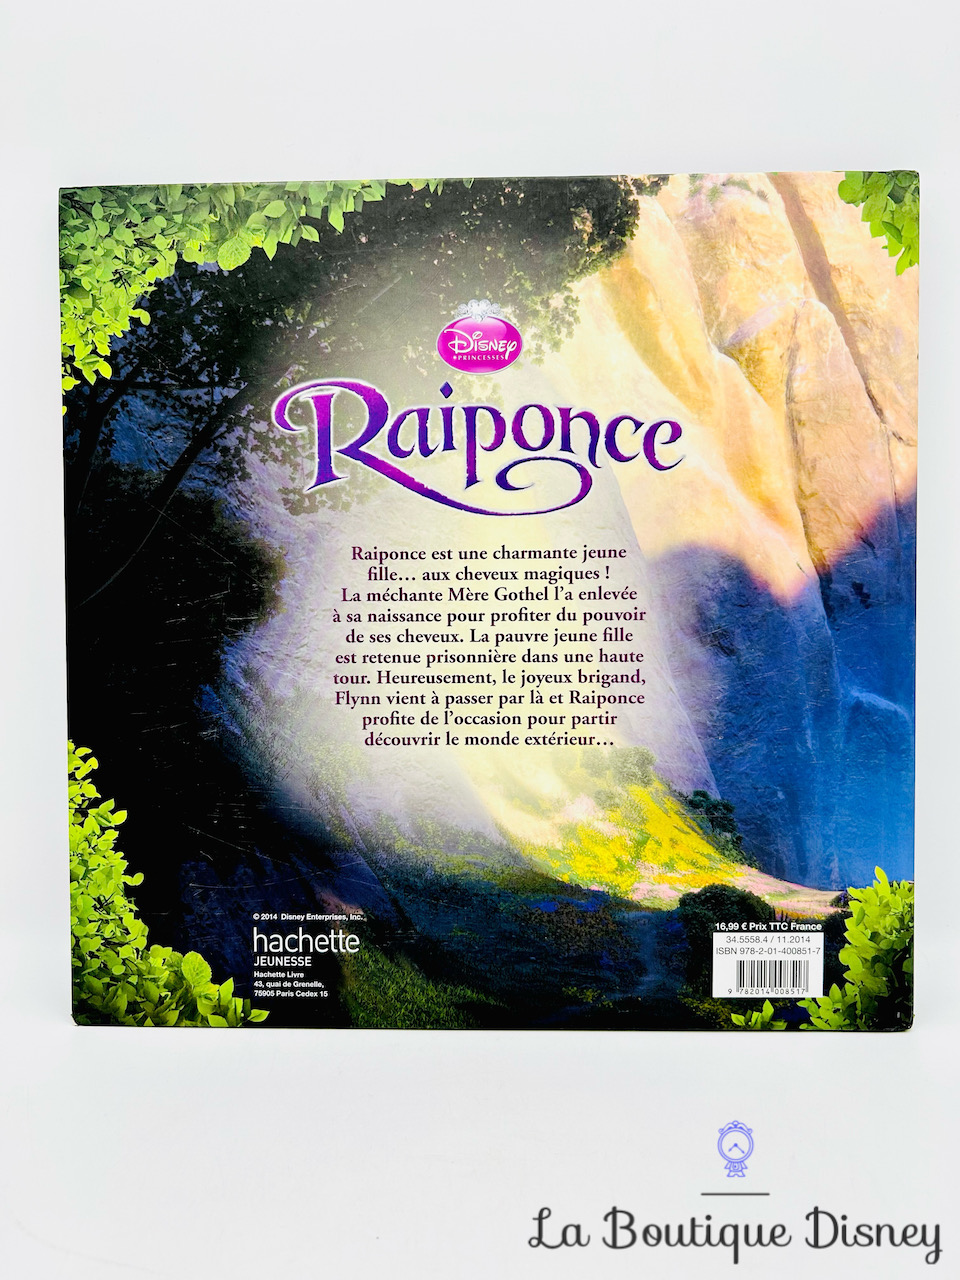 Raiponce - Bibliothèque Disney 15 - Raiponce - Le roman du film